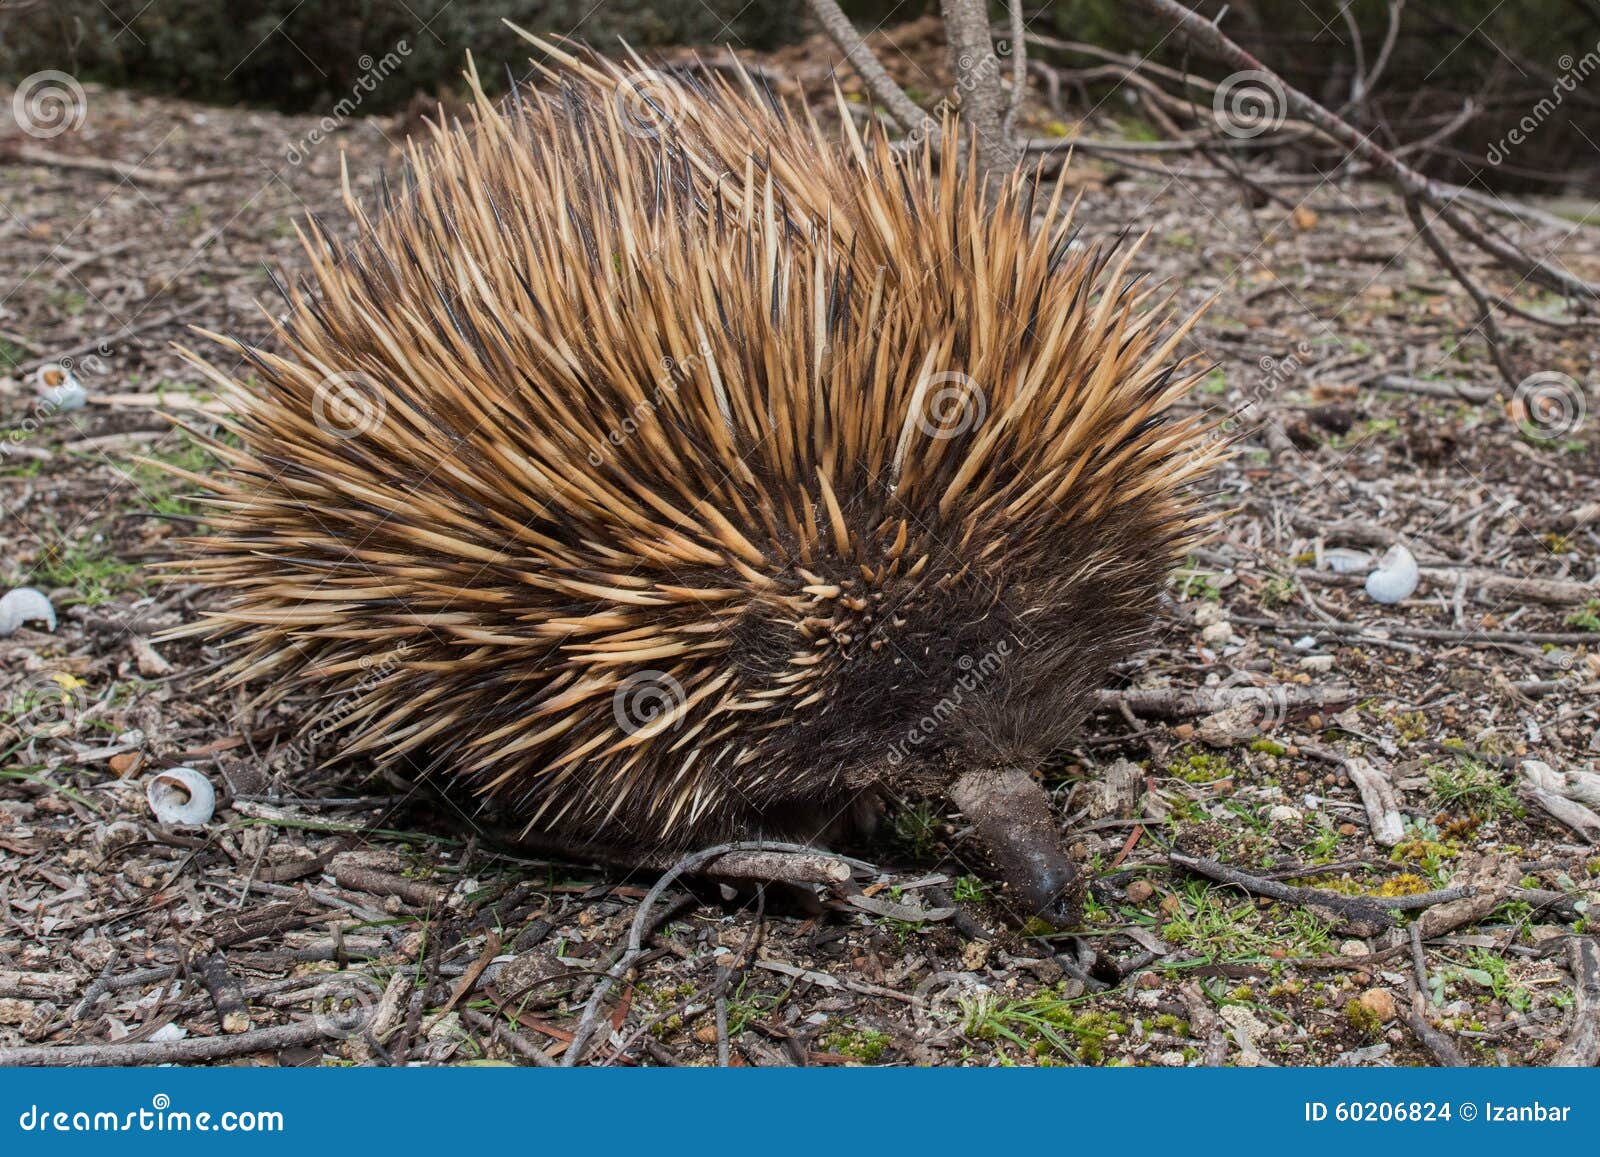 Echidna Australian Endemic Animal Stock Photo - Image of spikes, aussie ...